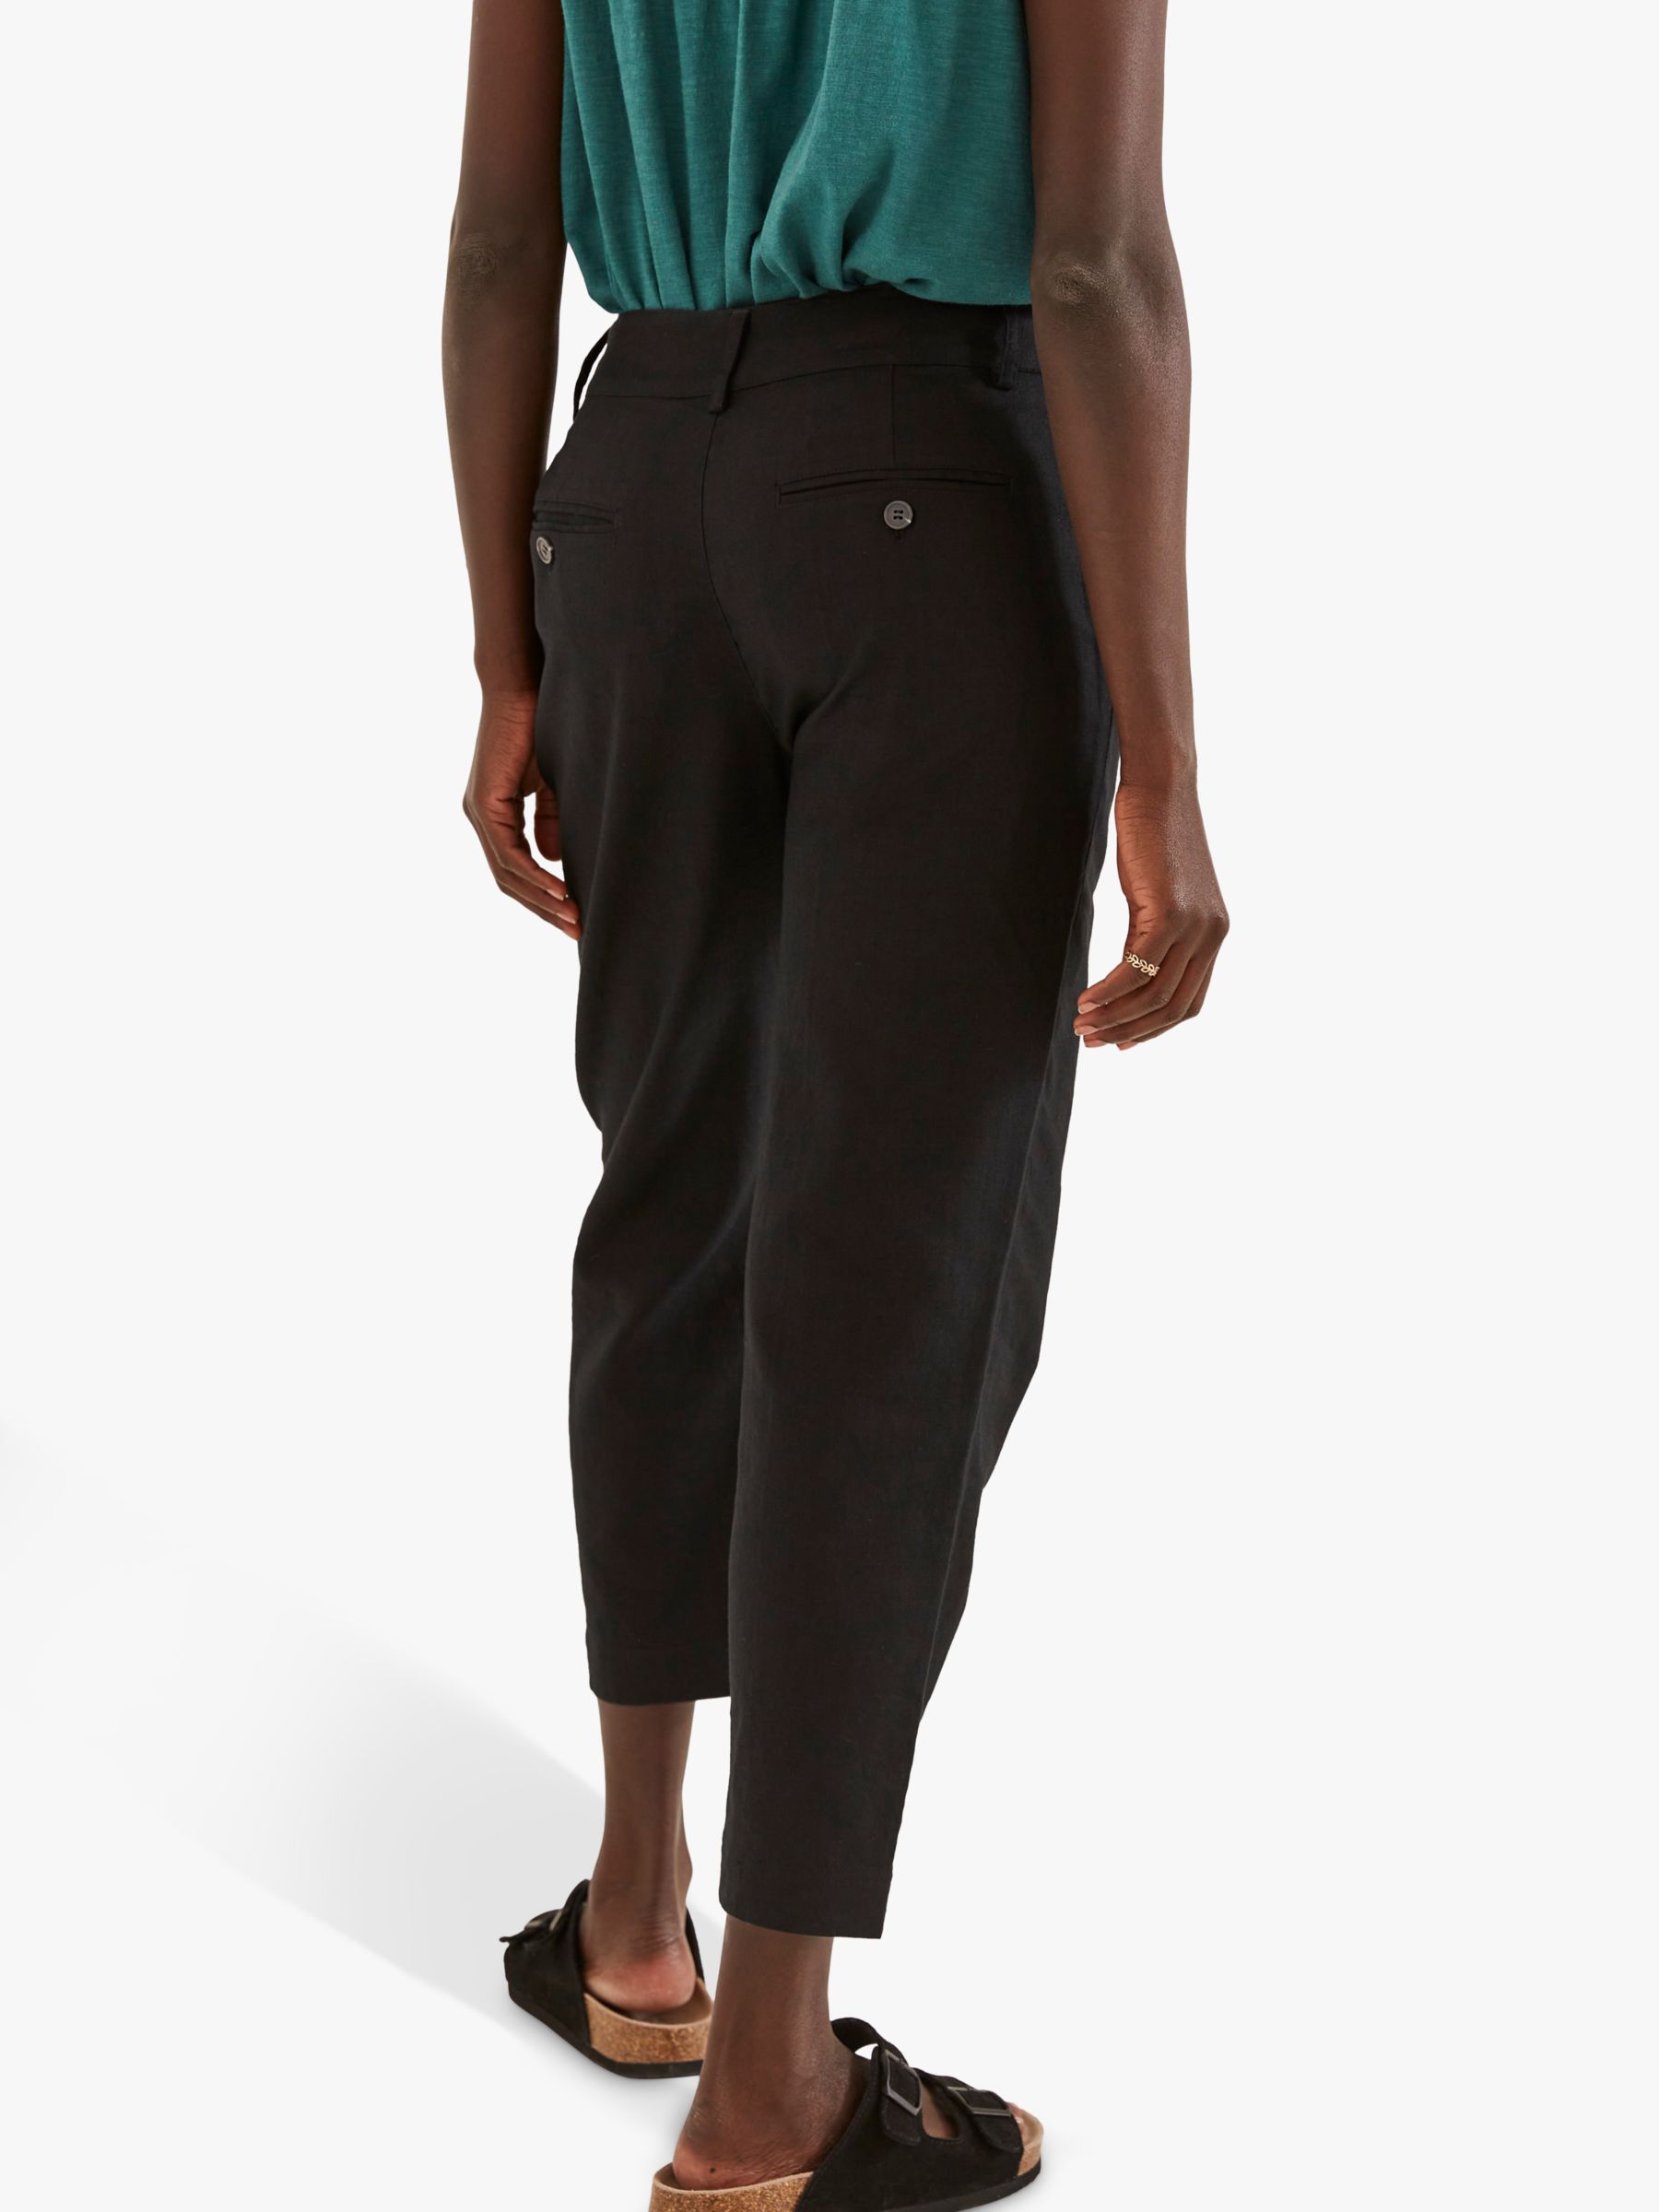 FatFace Purton Linen Blend Trousers, Black at John Lewis & Partners